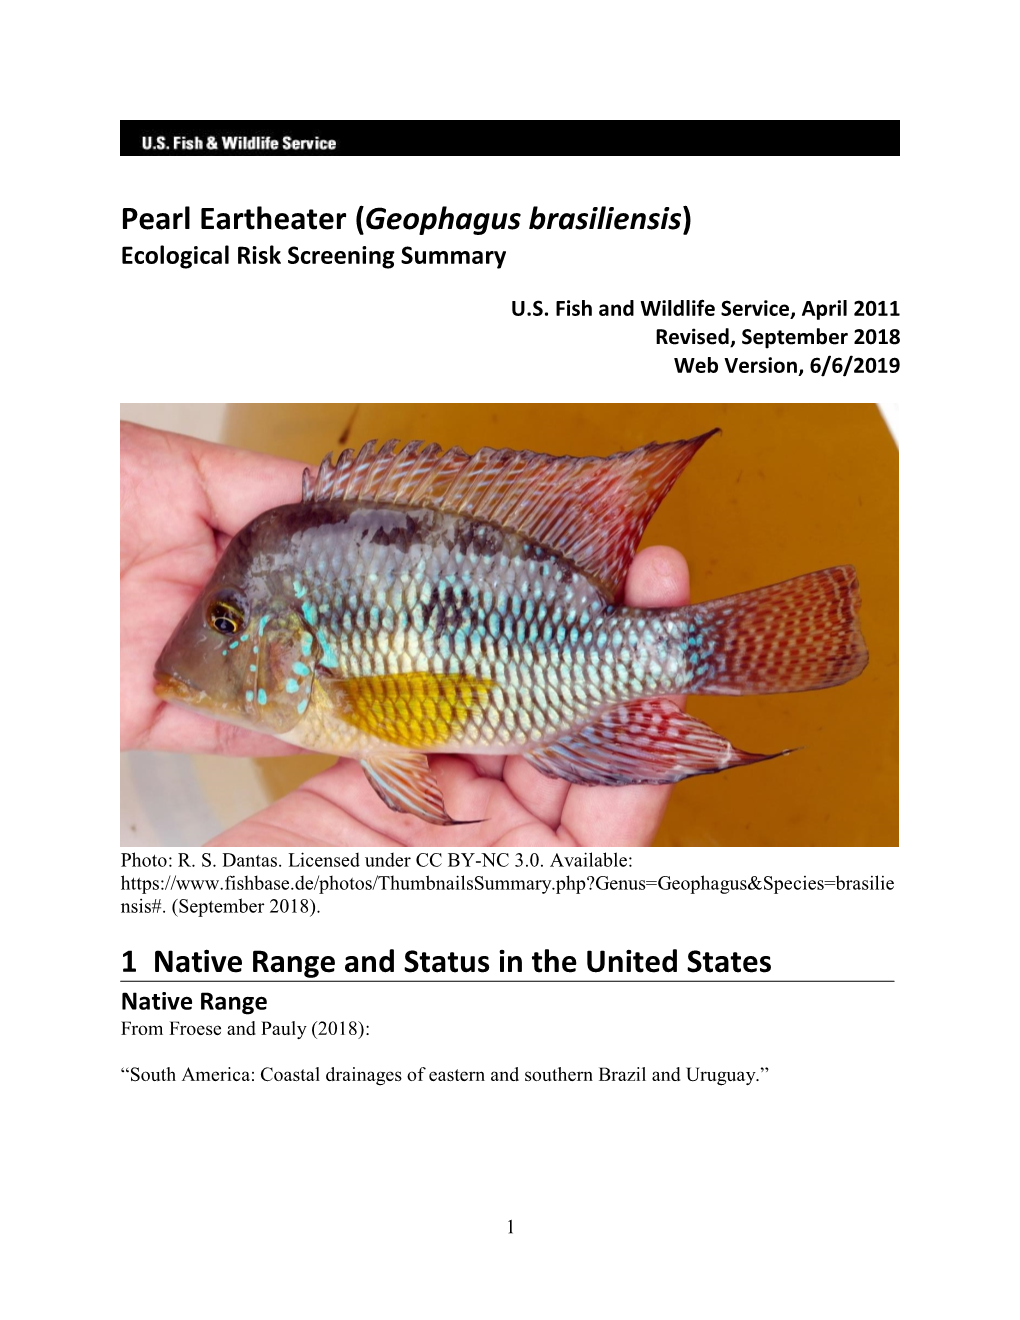 Geophagus Brasiliensis) Ecological Risk Screening Summary